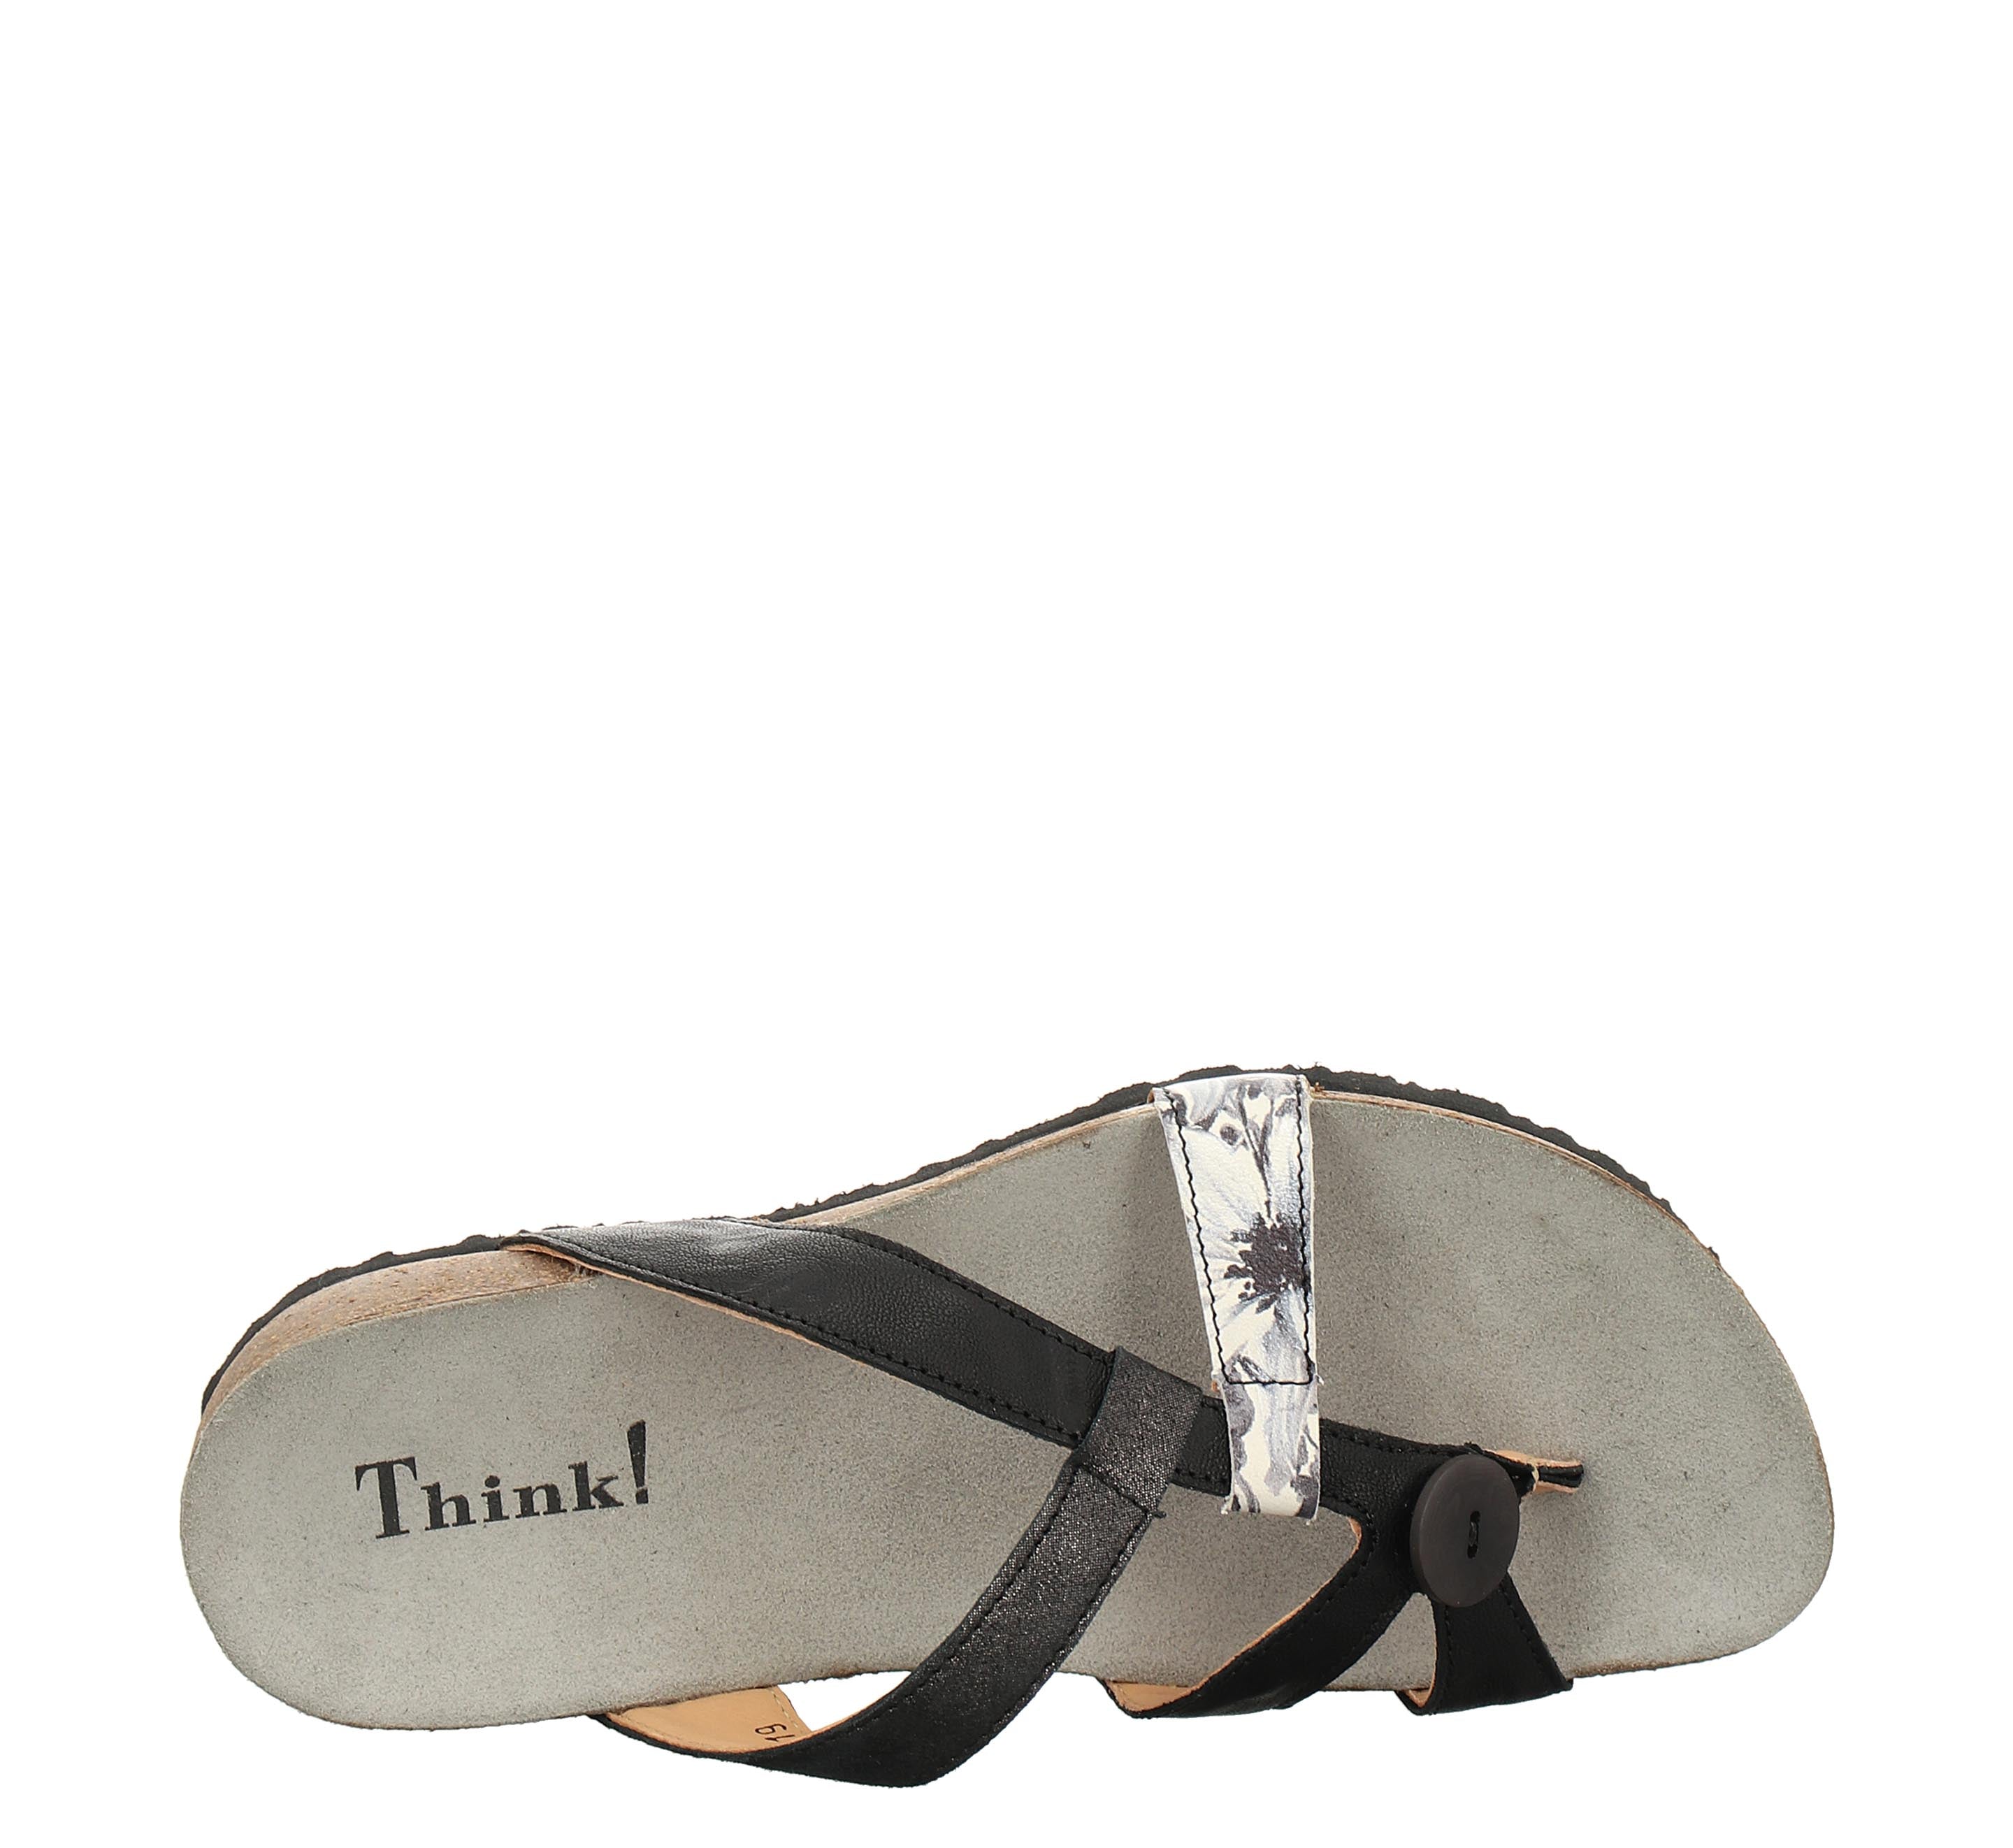 Think! Julia Stone Thong Sandals Women's Black Combi 3